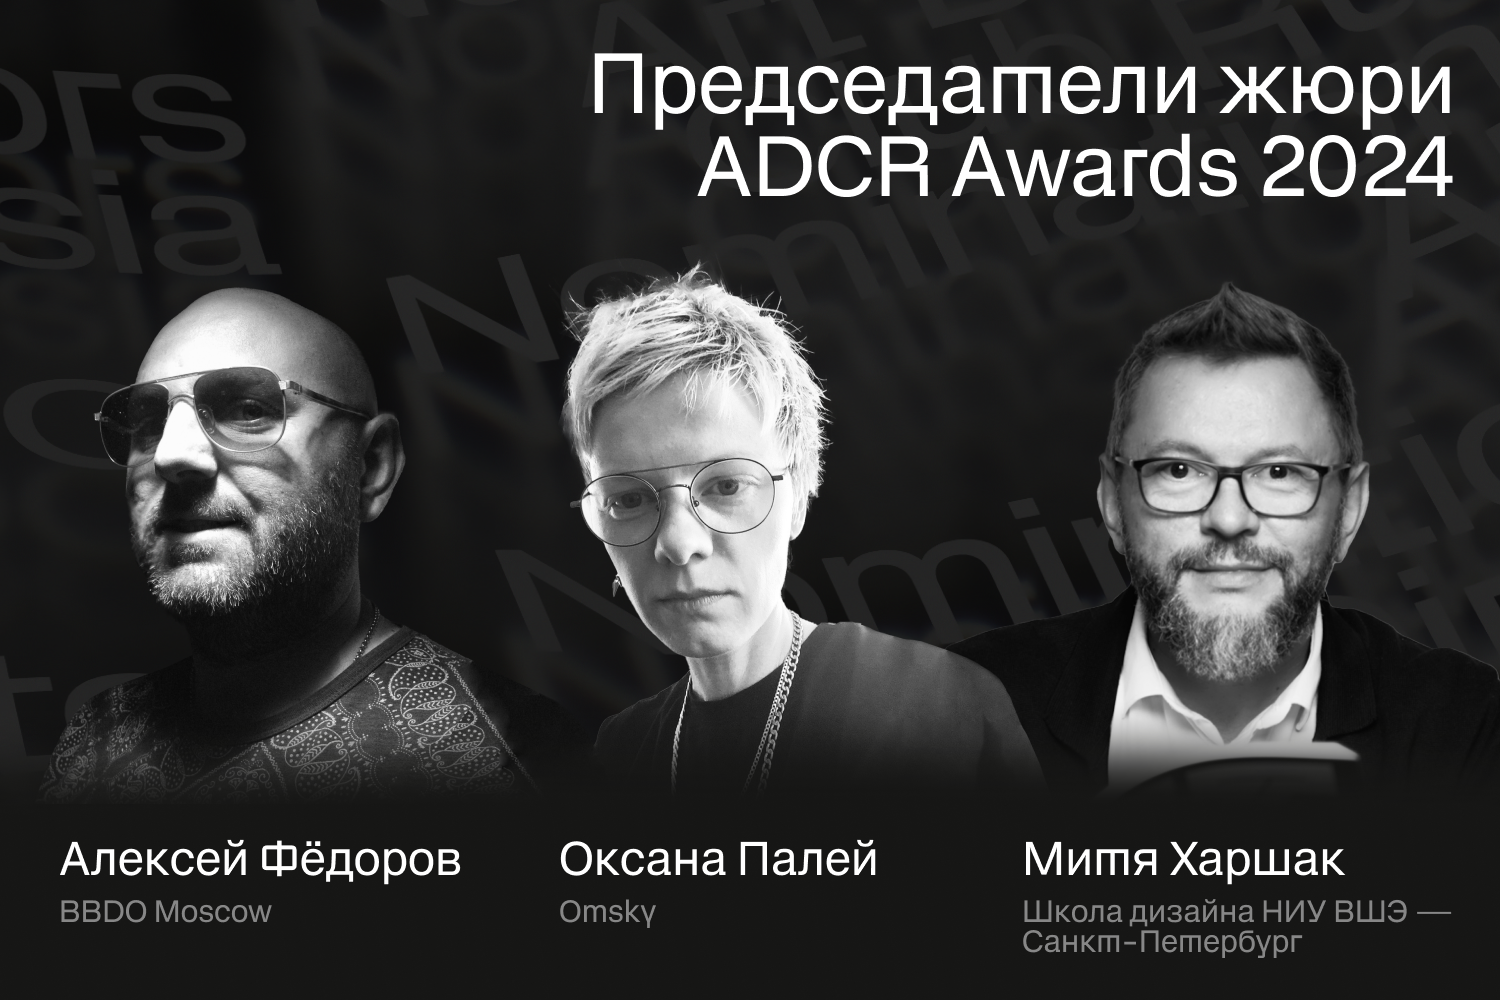  ADCR Awards 2024     